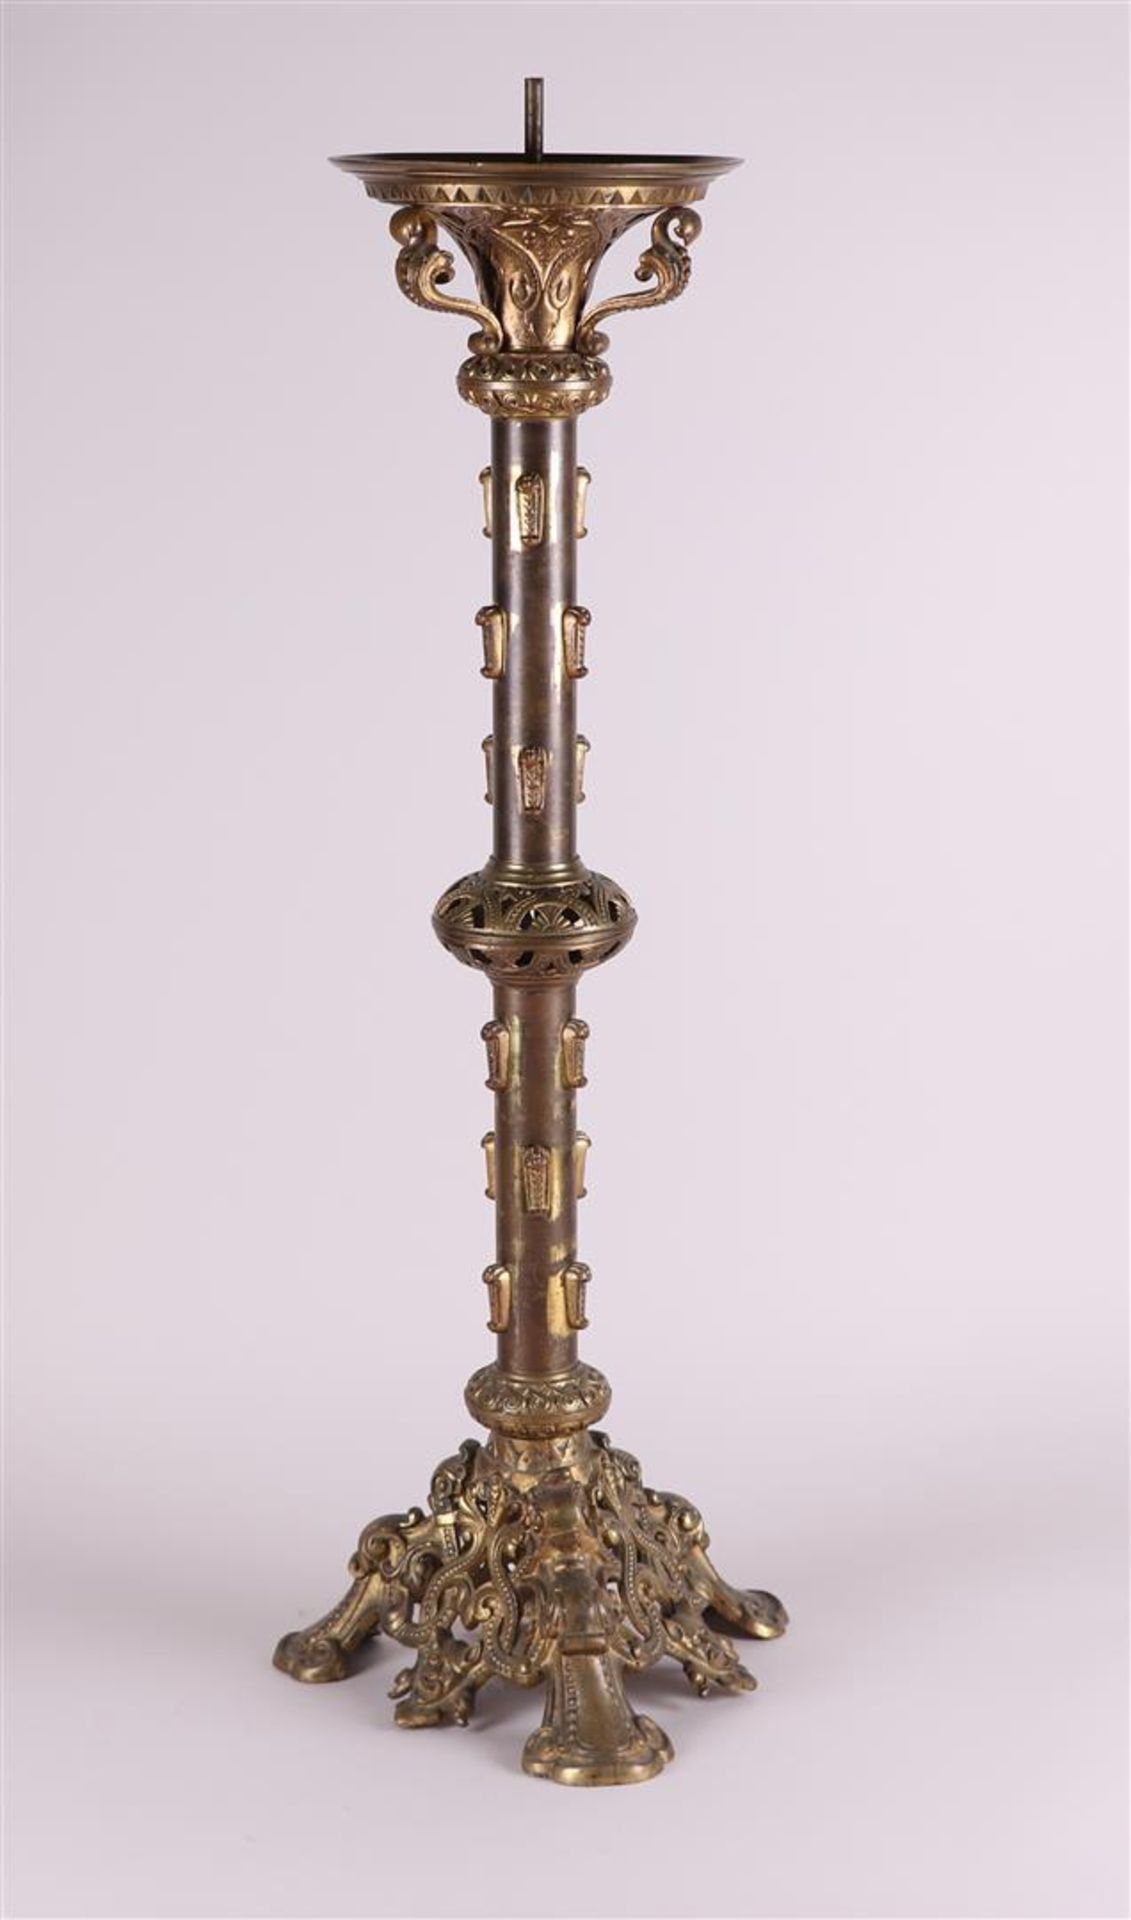 A large brass altar candlestick, ca. 1900.